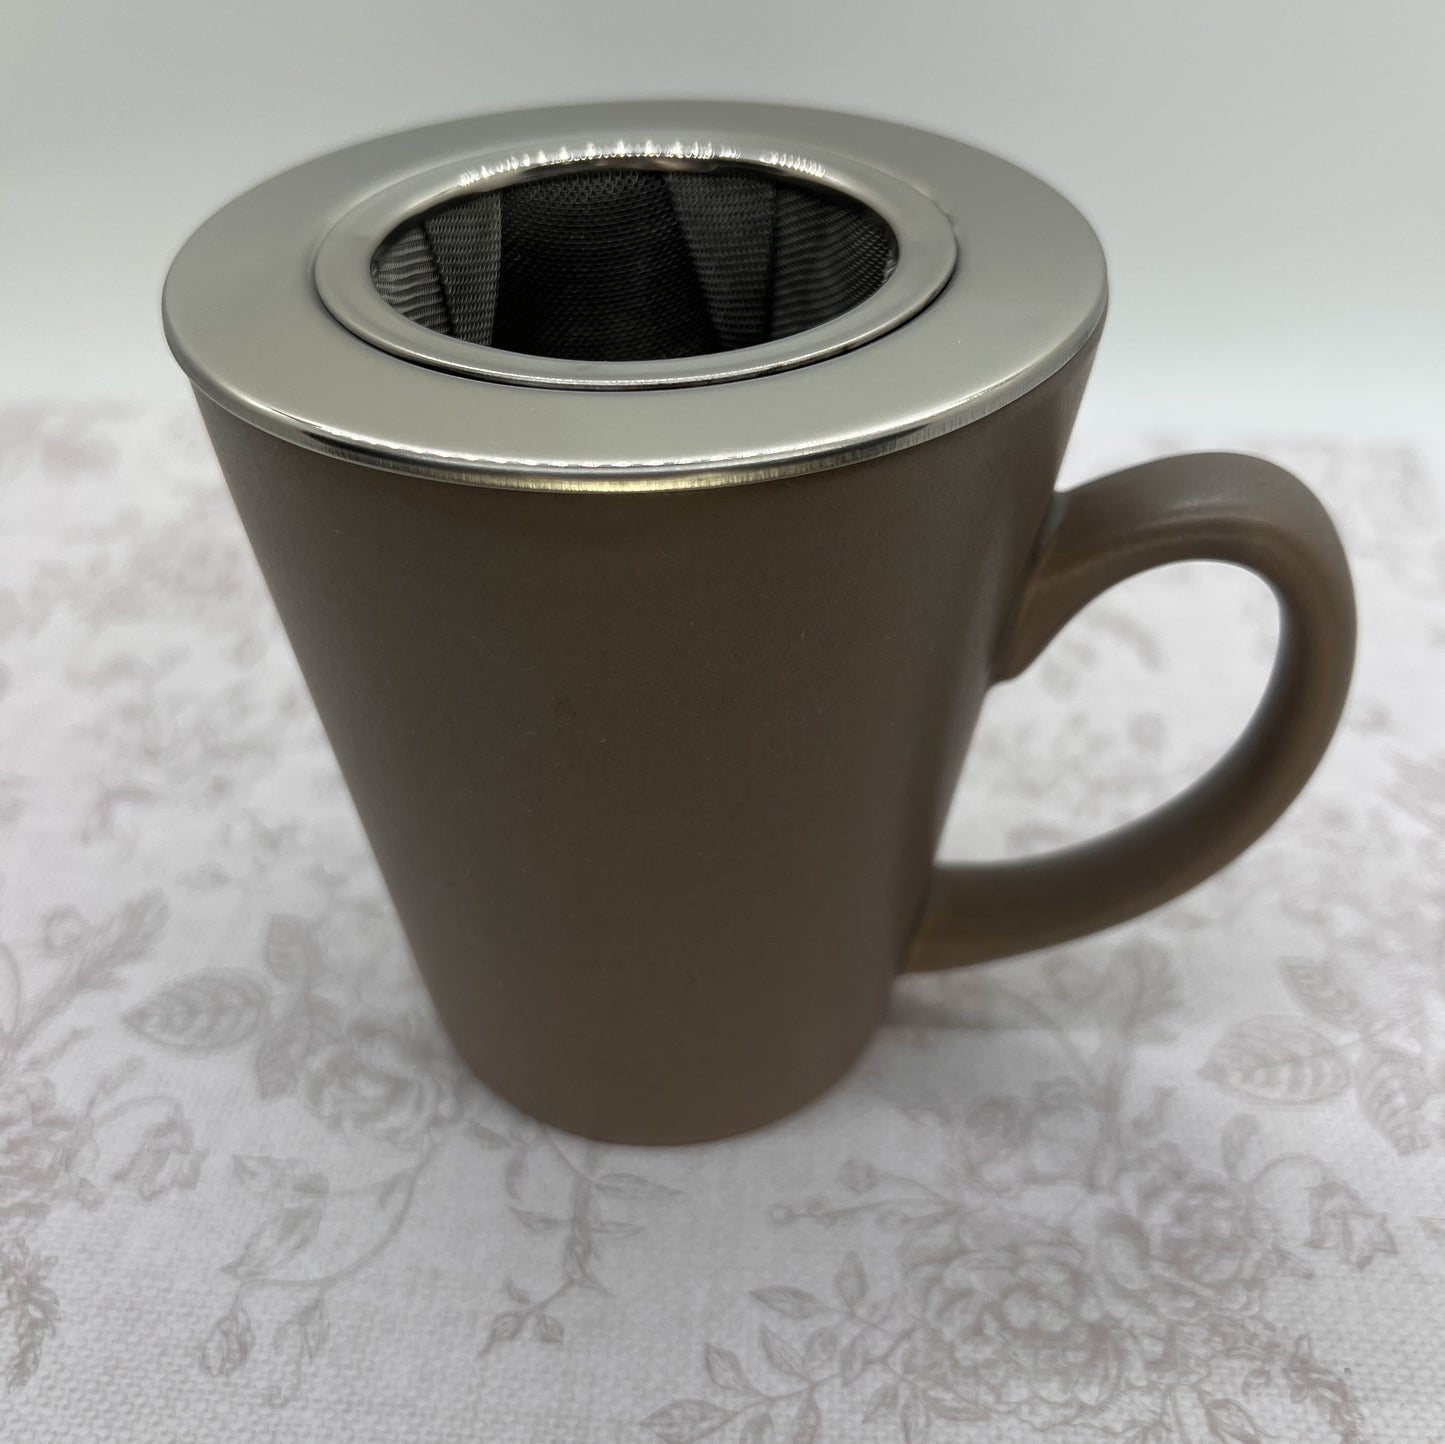 Tea Infuser - Paris Tea Cup